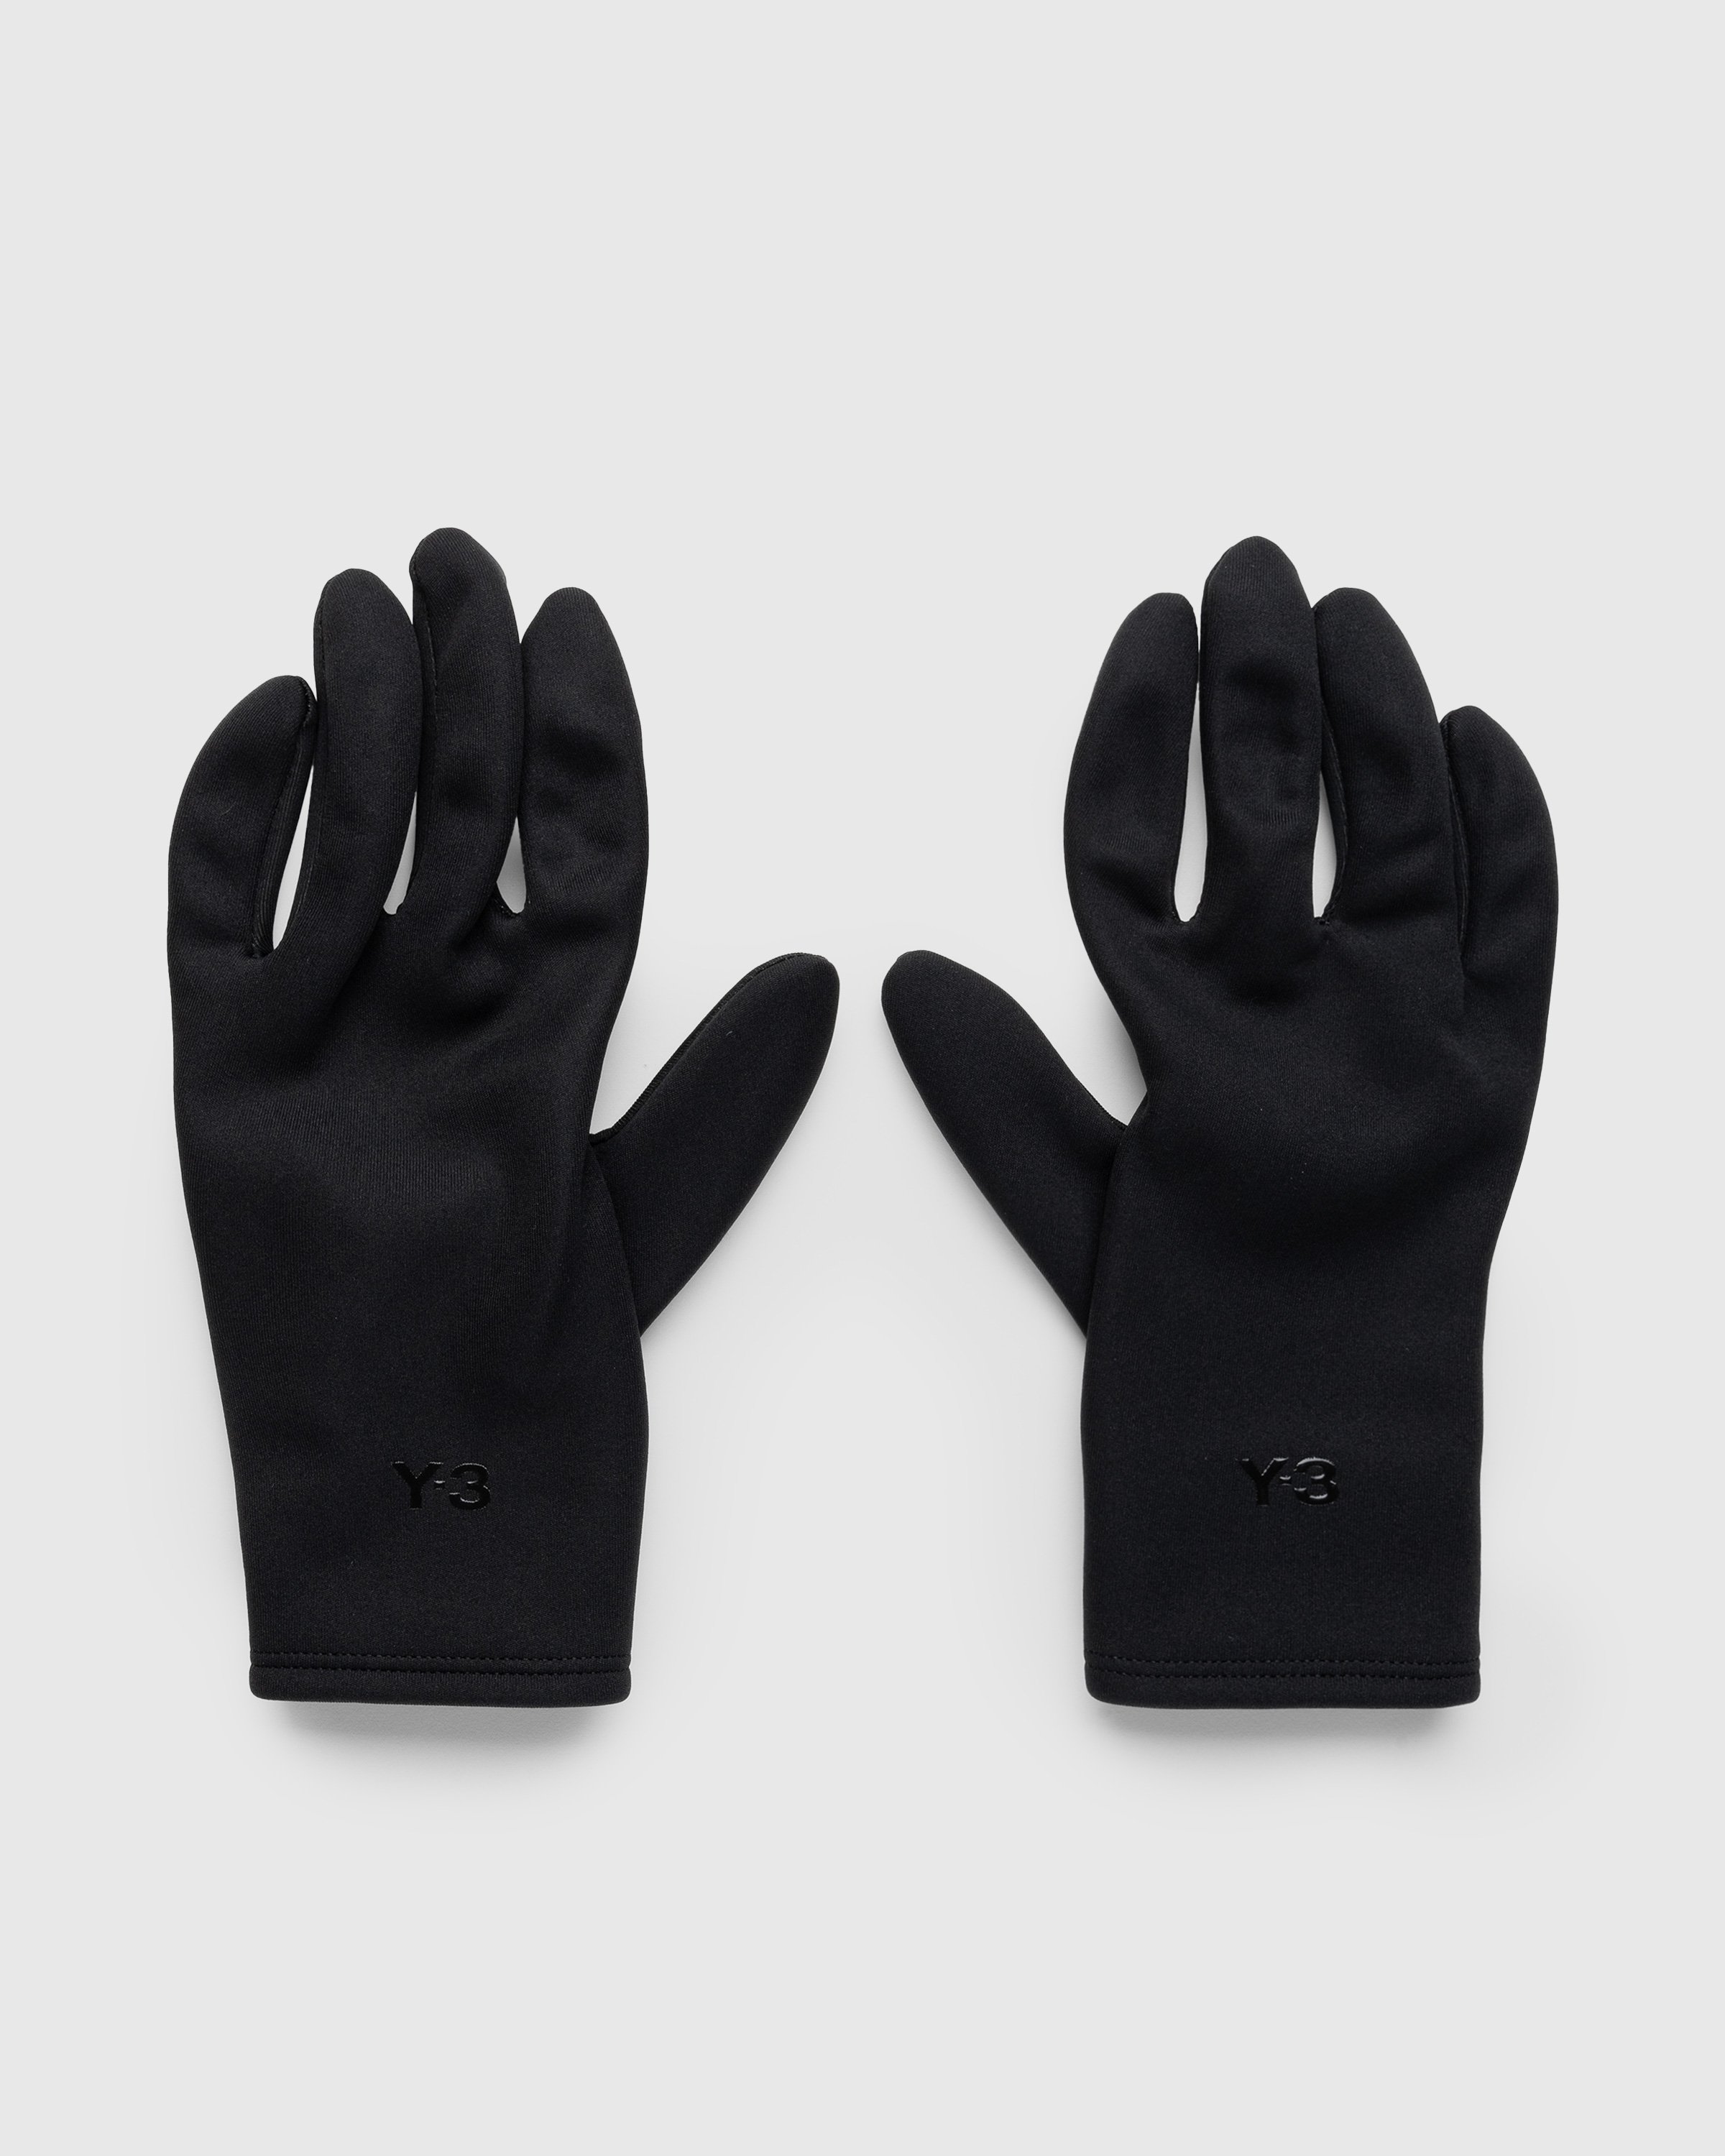 Y-3 - GTX Gloves Black - Accessories - Black - Image 1